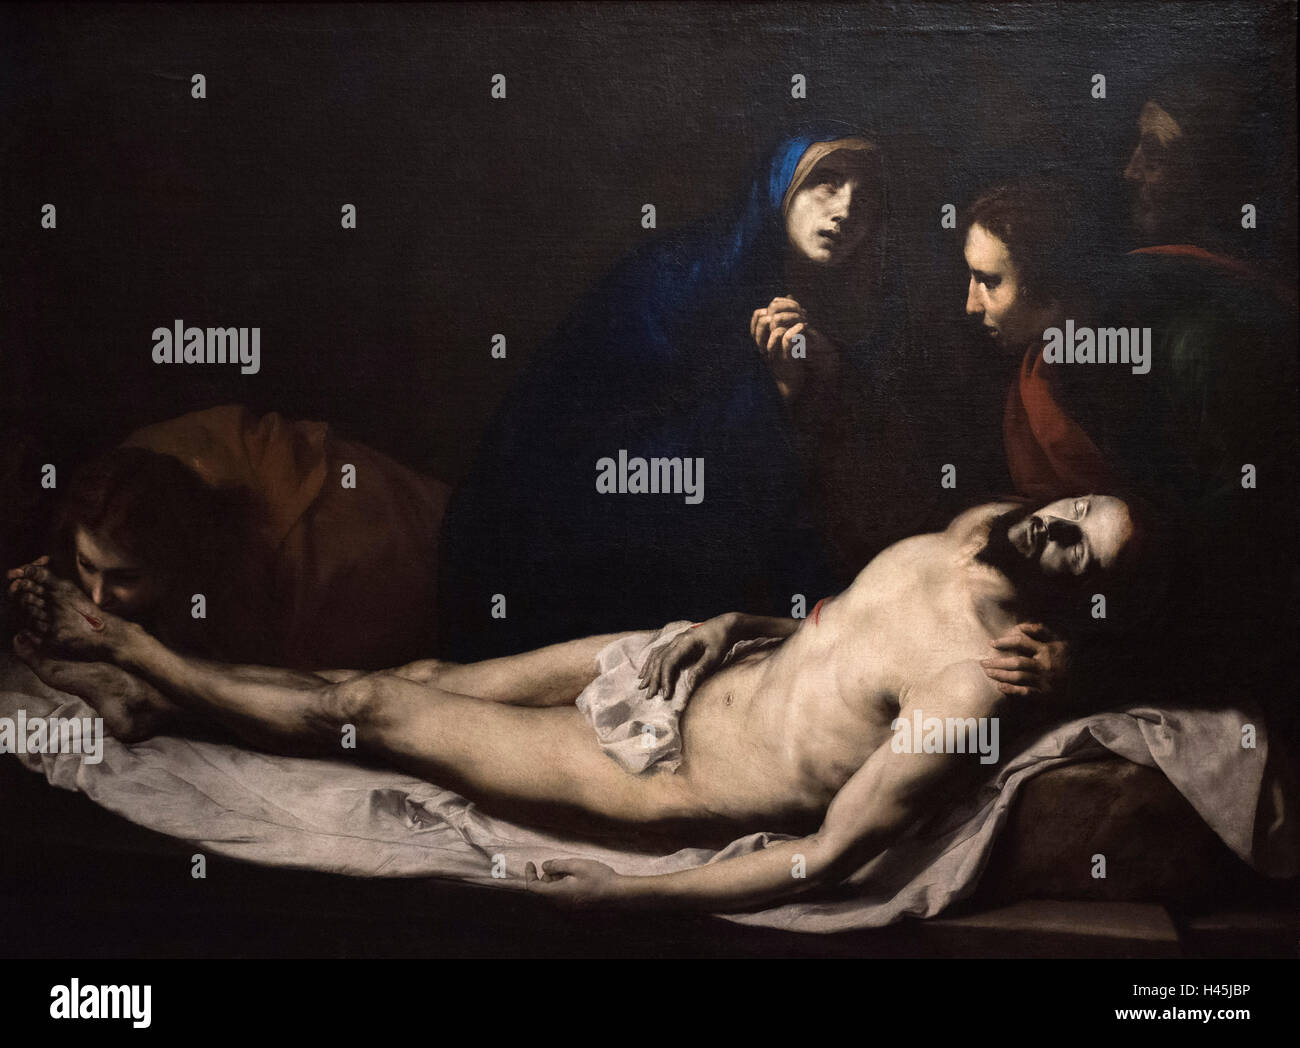 Jusepe de Ribera (1591-1652), Lamentation over the Body of Christ, 1633. Stock Photo